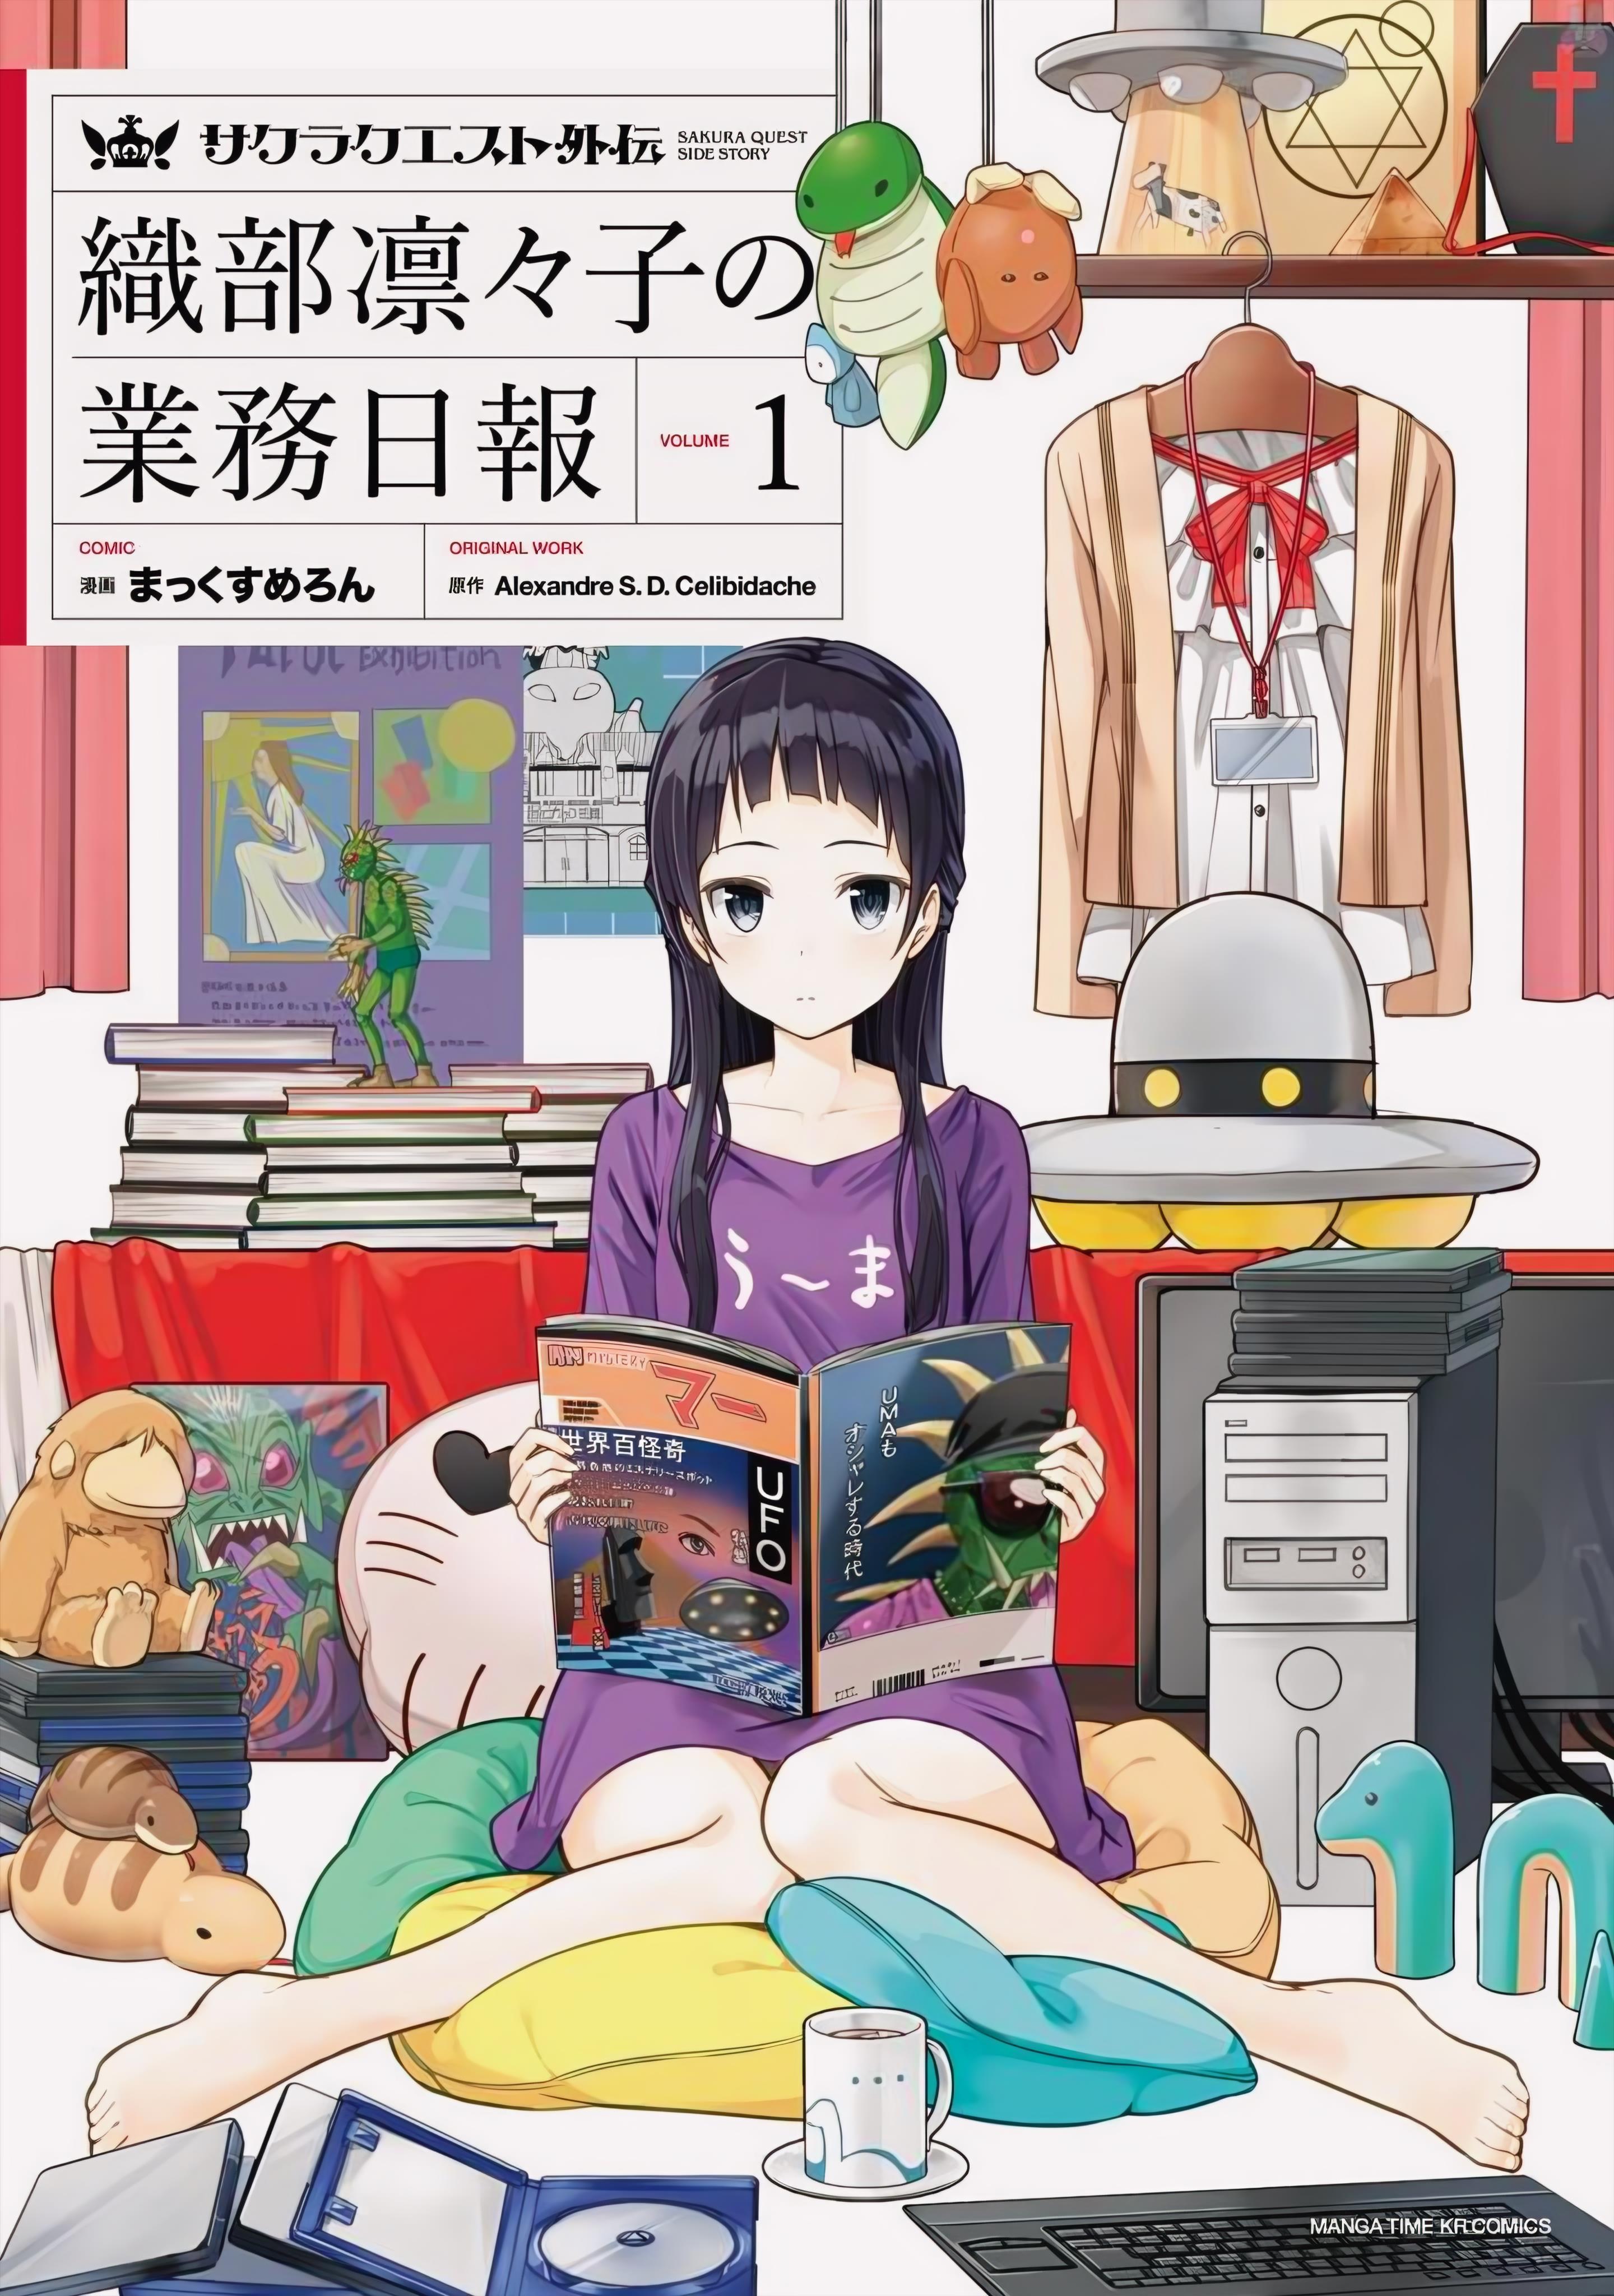 Sakura Quest Side Story: Ririko Oribe's Daily Report Vol 1 Chapter 1 #1